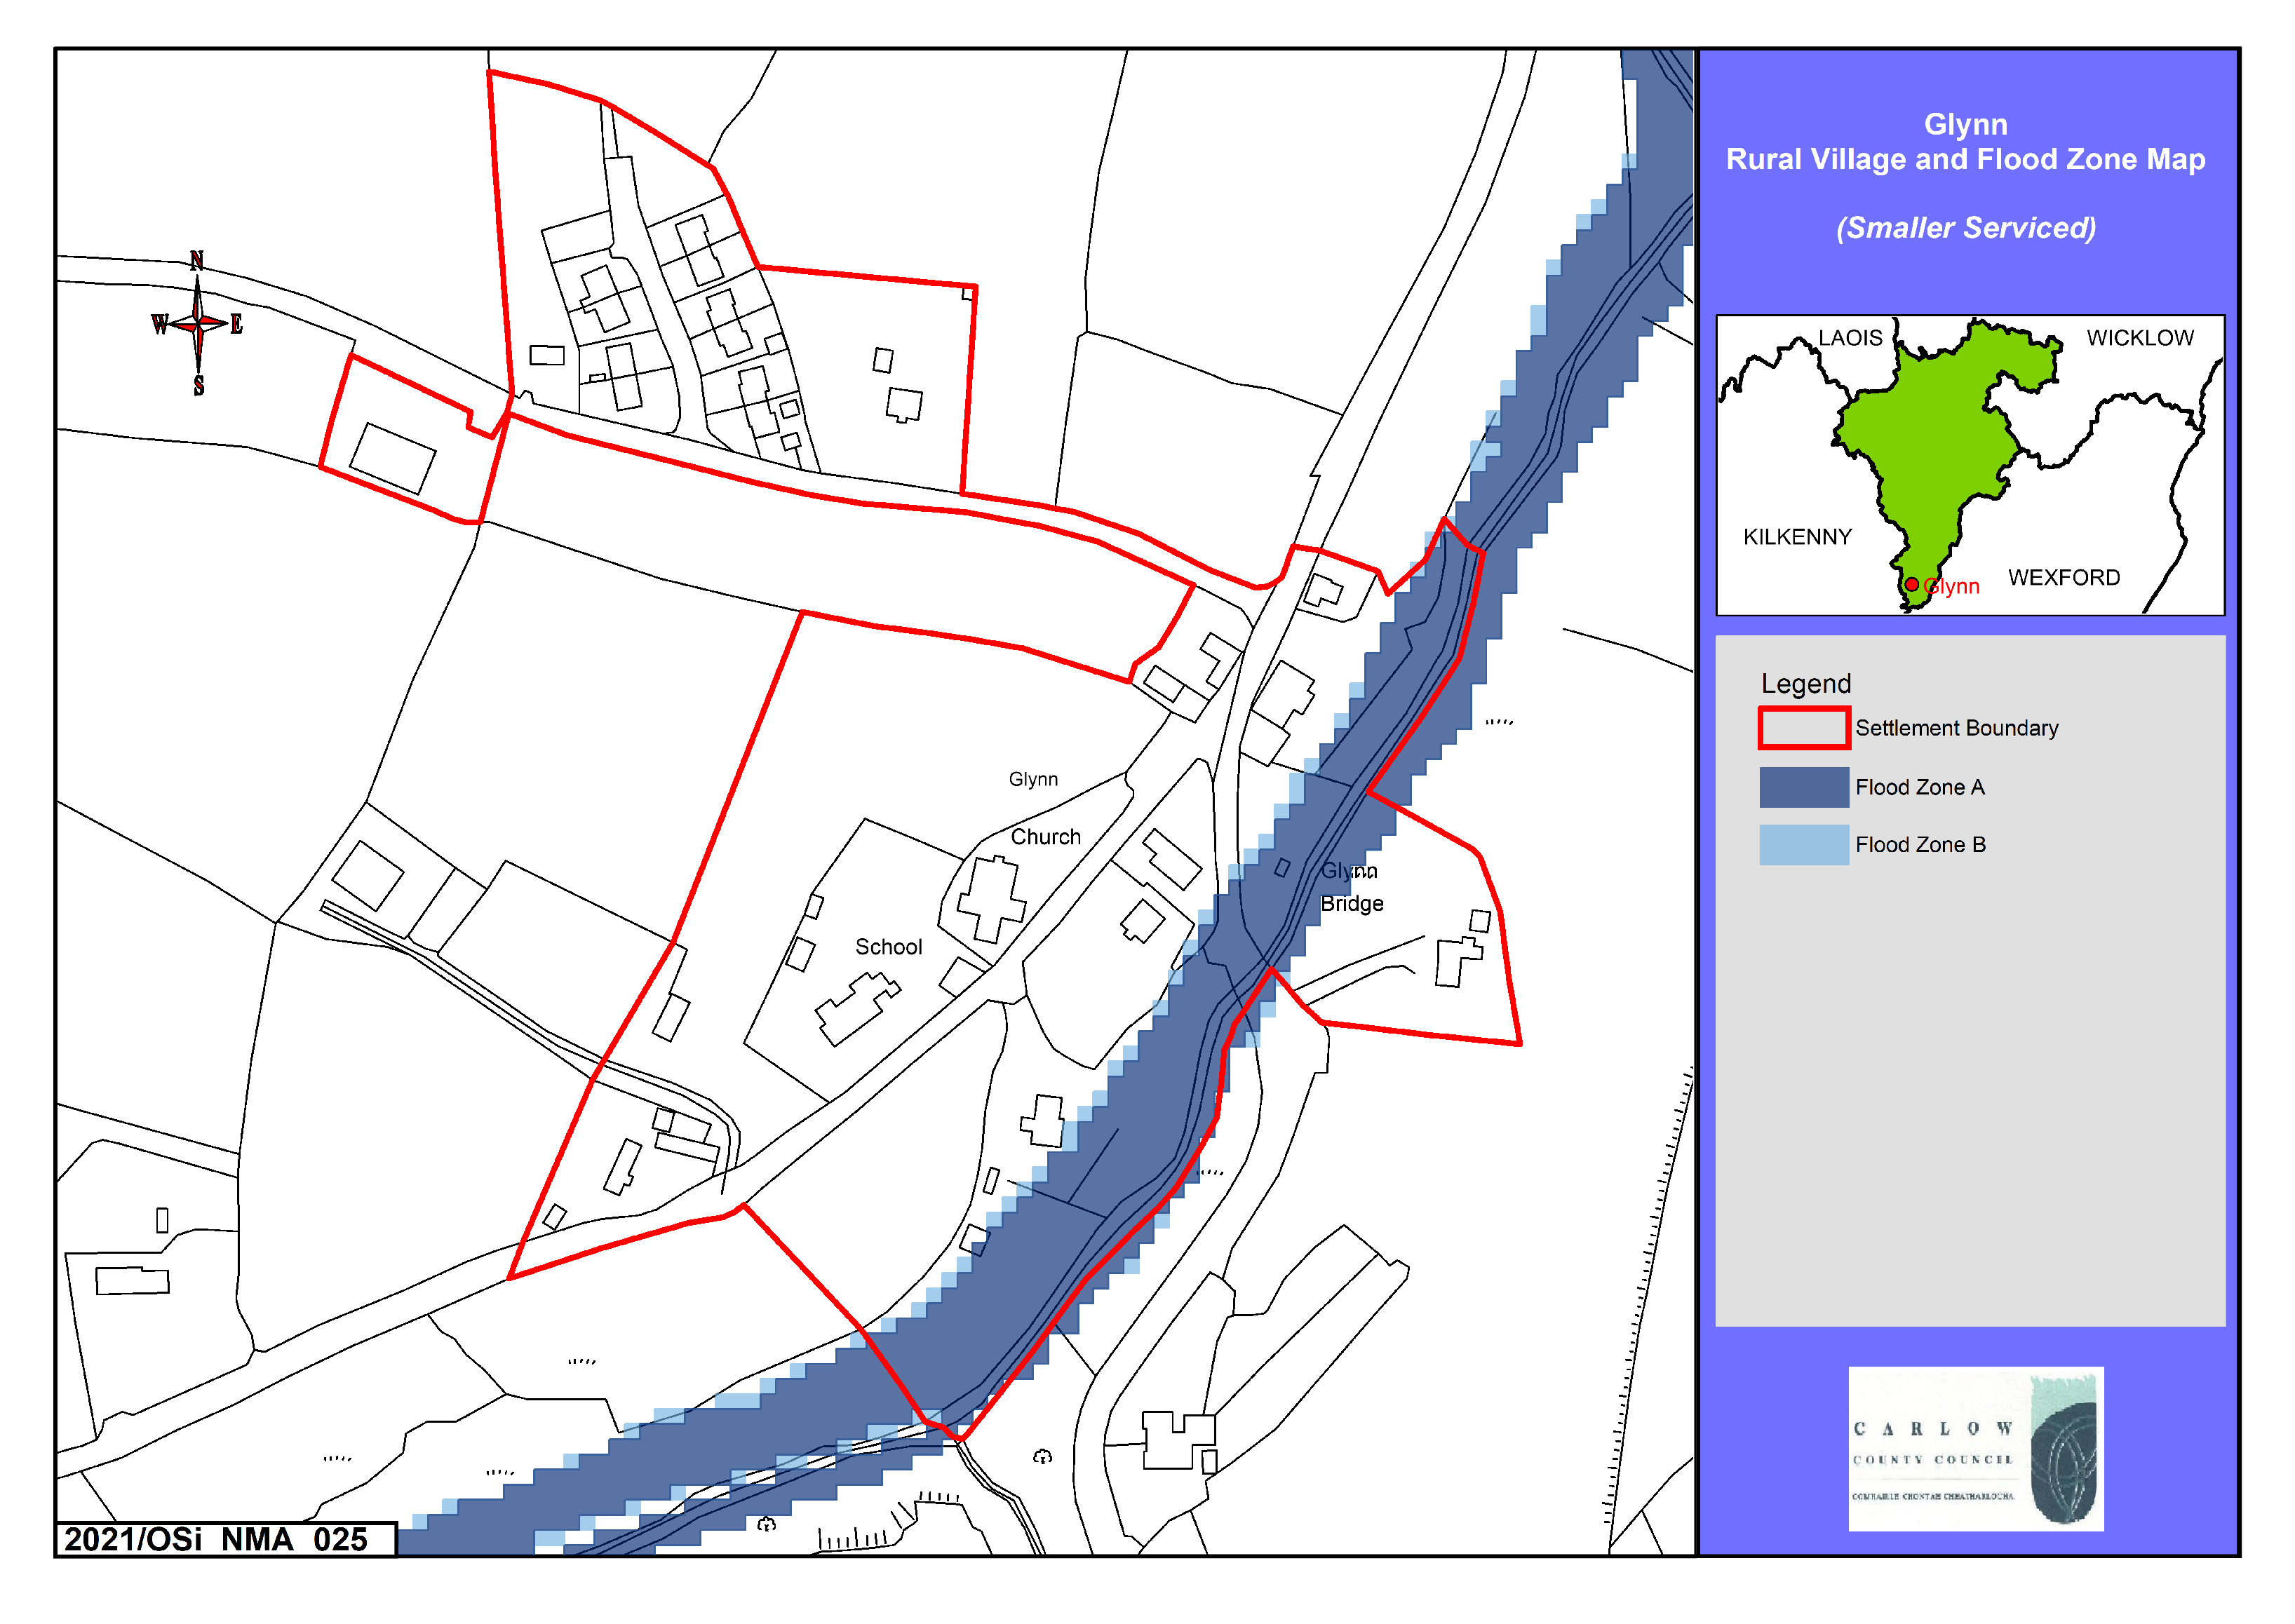 Glynn Rural Village and Flood Zone Map